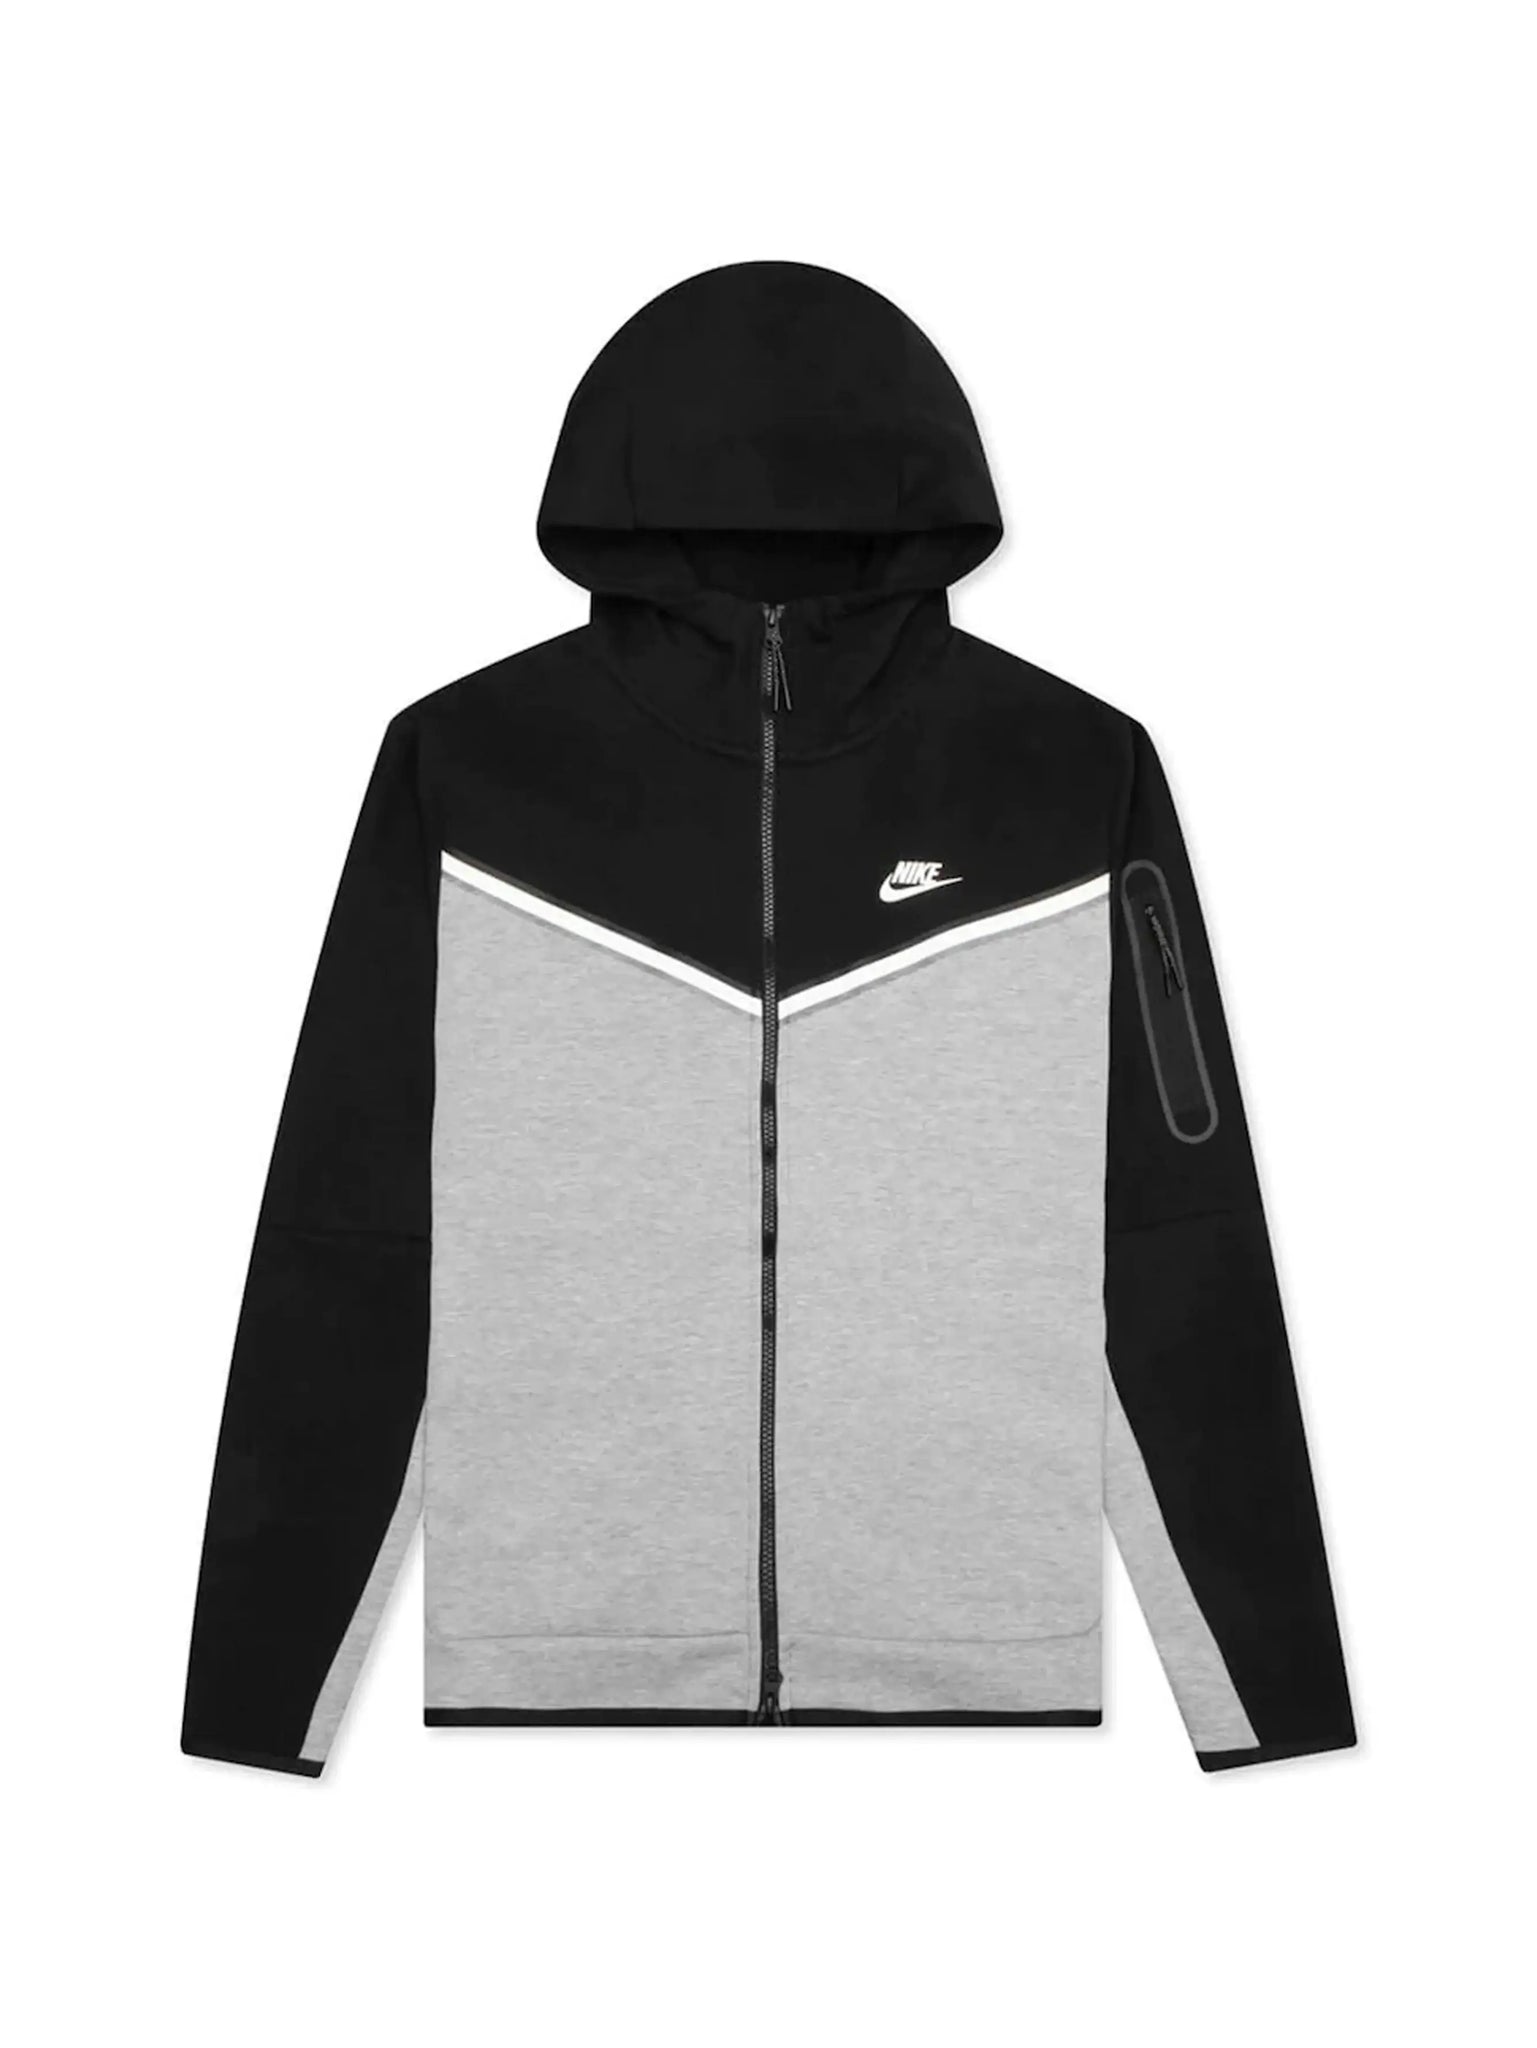 Nike Sportswear Tech Fleece Full-Zip Hoodie Black/Dark Grey Heather/White in Melbourne, Australia - Prior